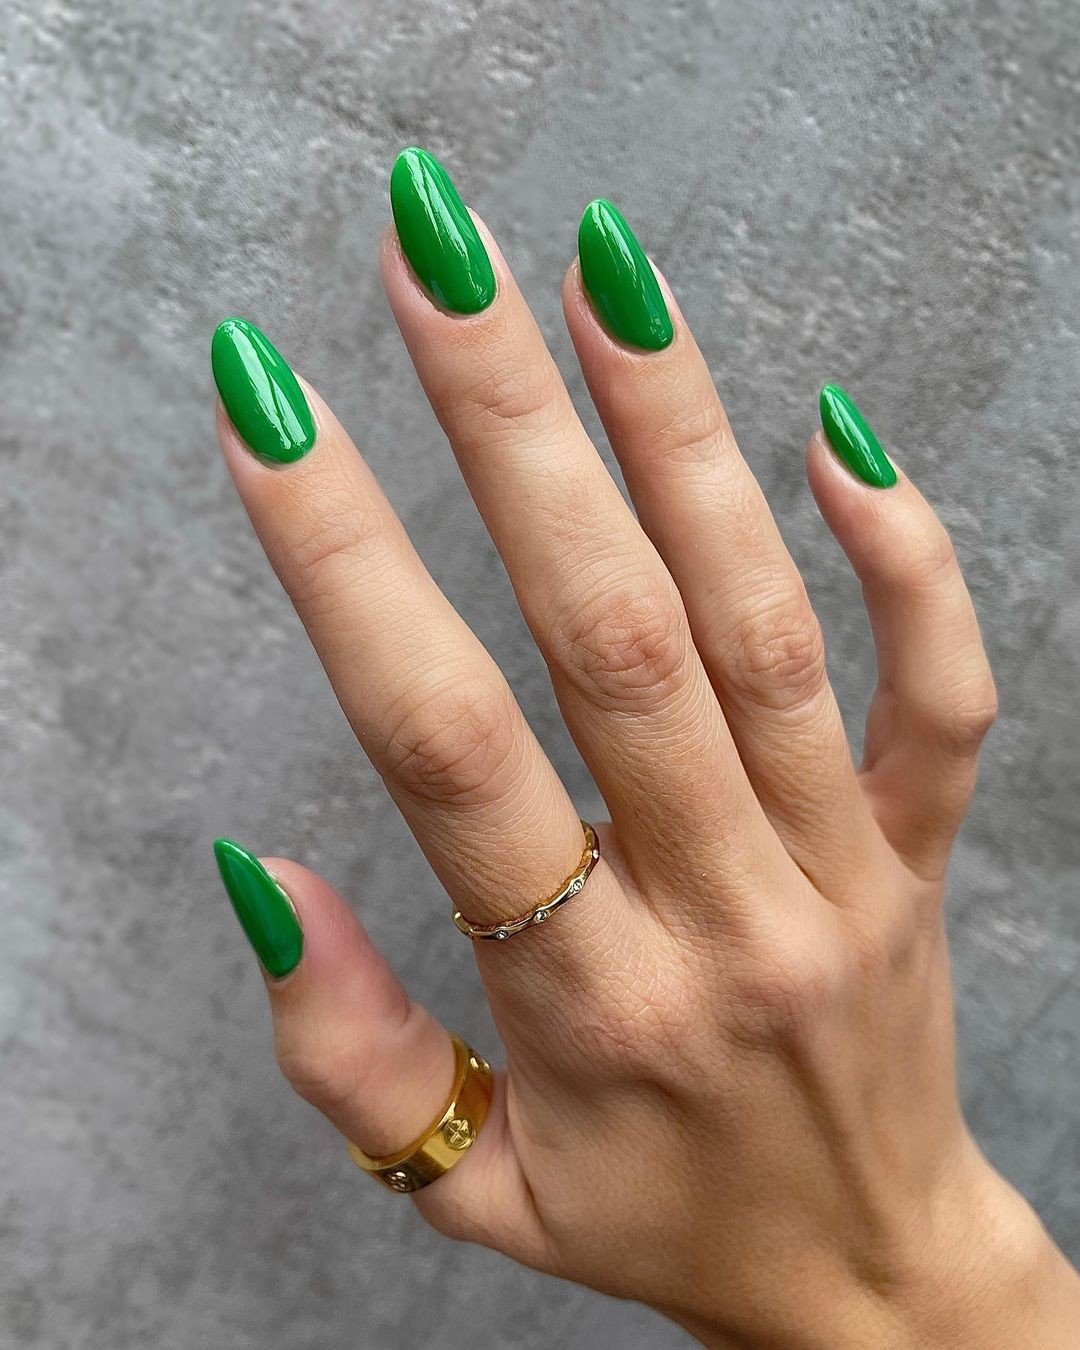 Unha verde (Foto: Instagram/ @beautyworksbyamy)